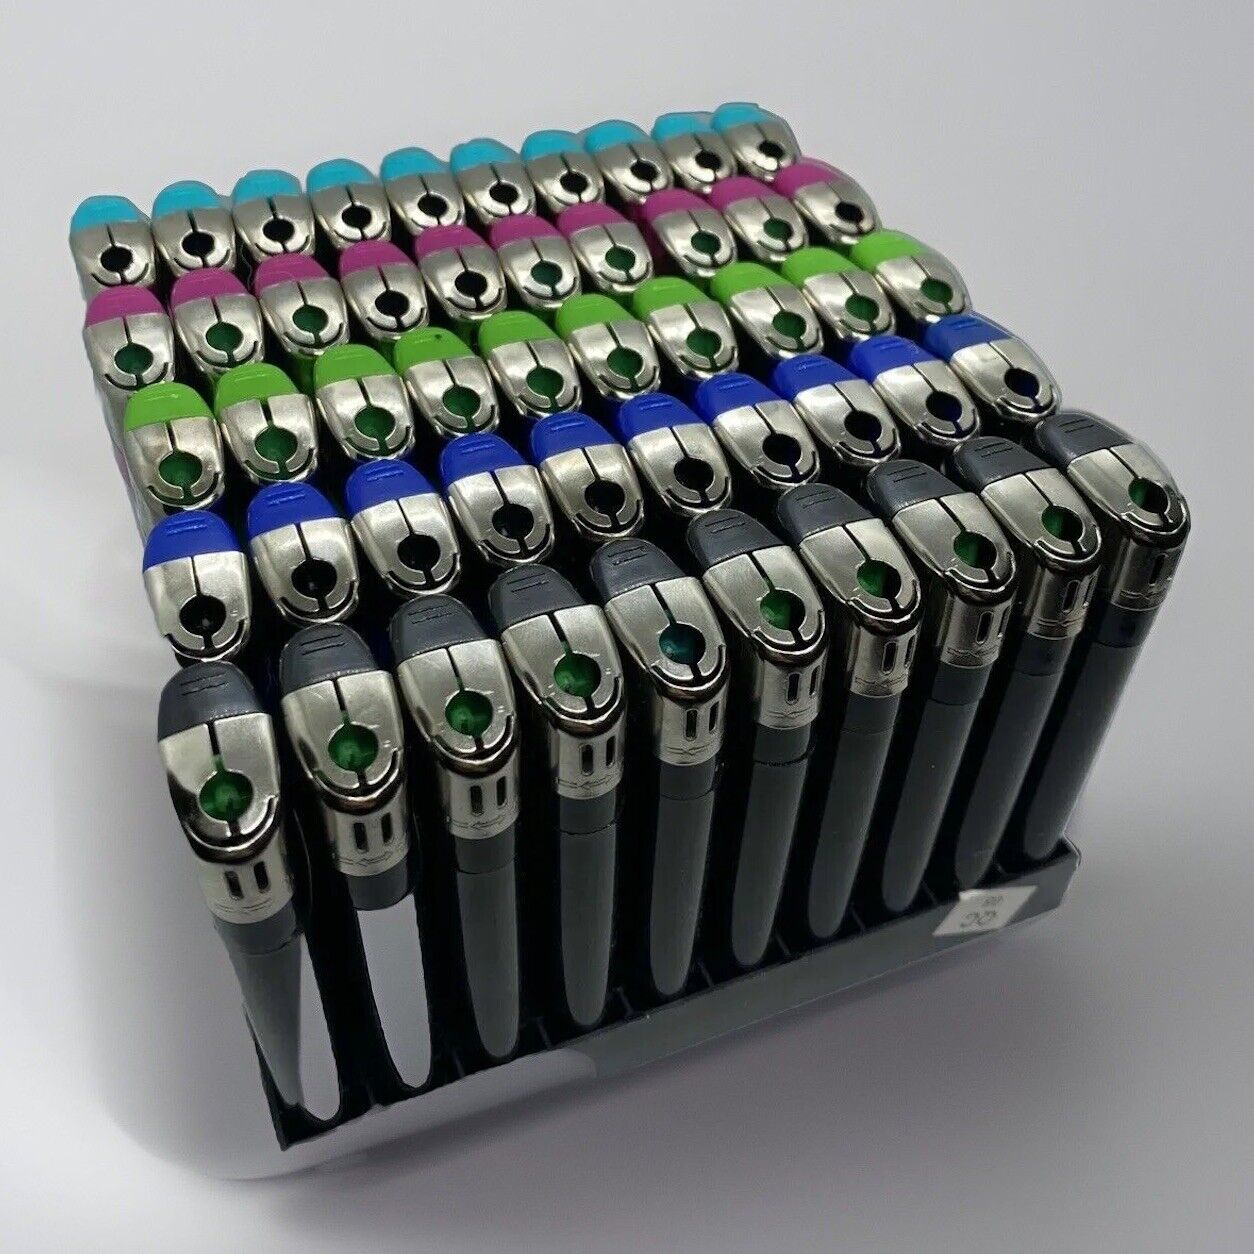 Bulk Pack of 500 Multi-Color Disposable Lighters - Wholesale Assorted Set